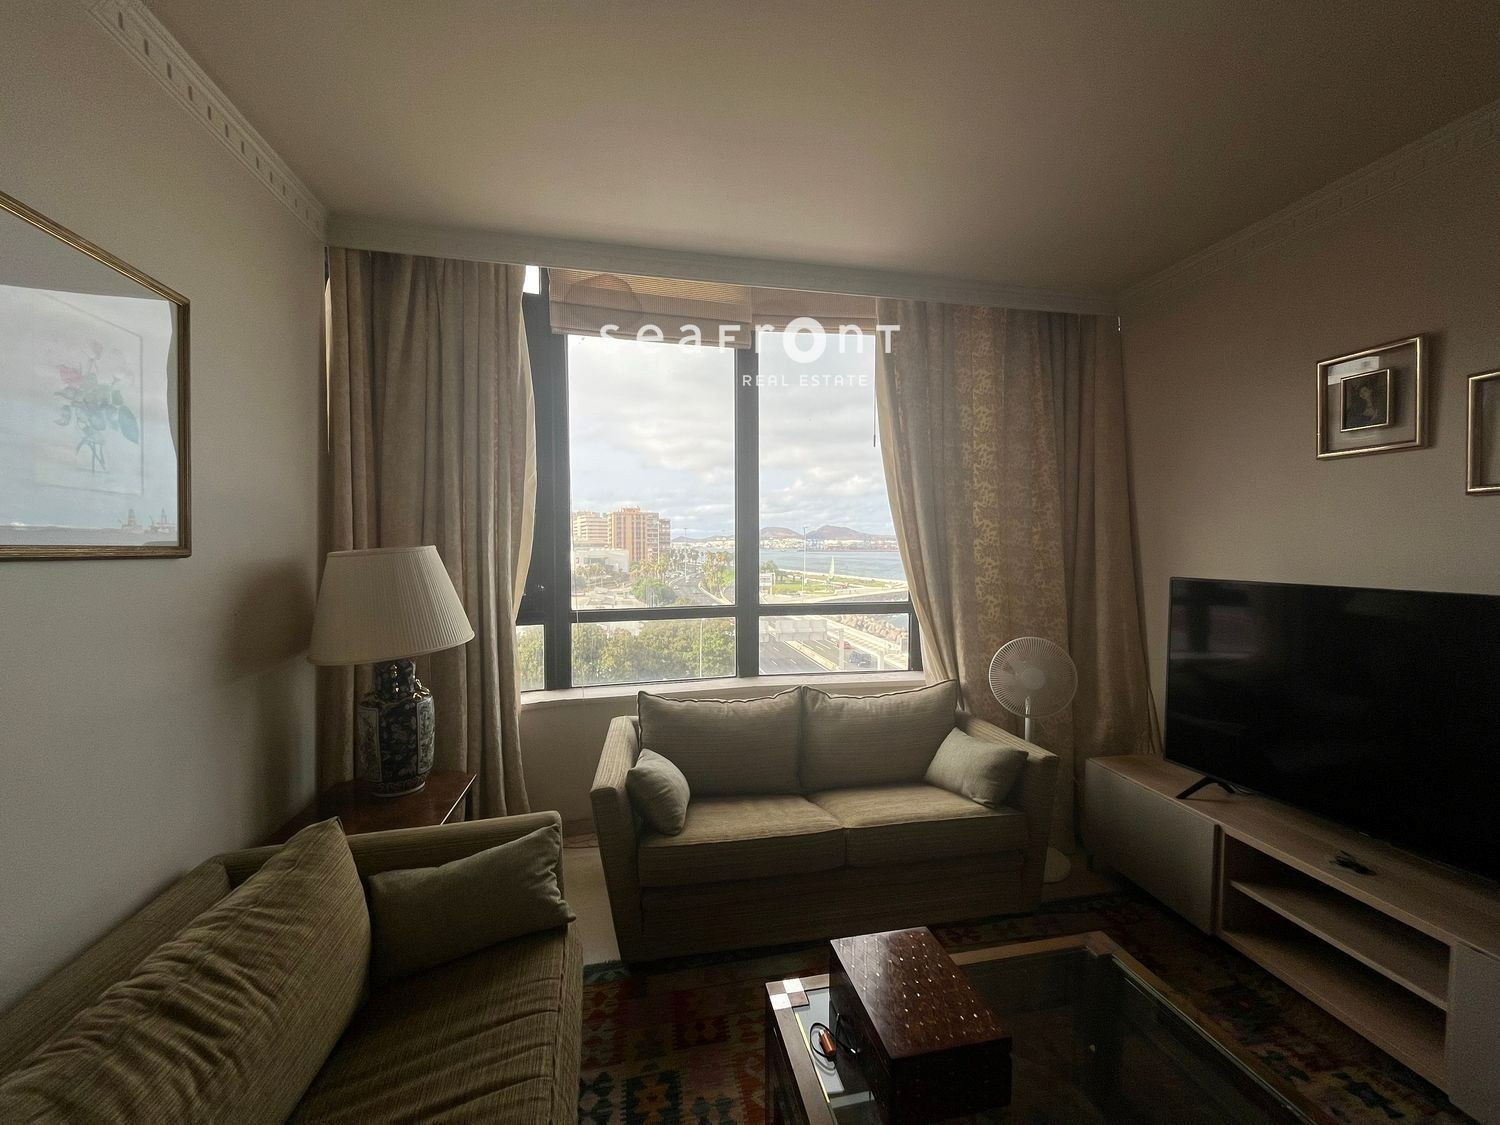 Apartment for sale on the seafront in Avenida Maritim, Las Palmas Pis en venda a primera línia de mar a Avenida Maritim, Las Palmas de Gran Canaria